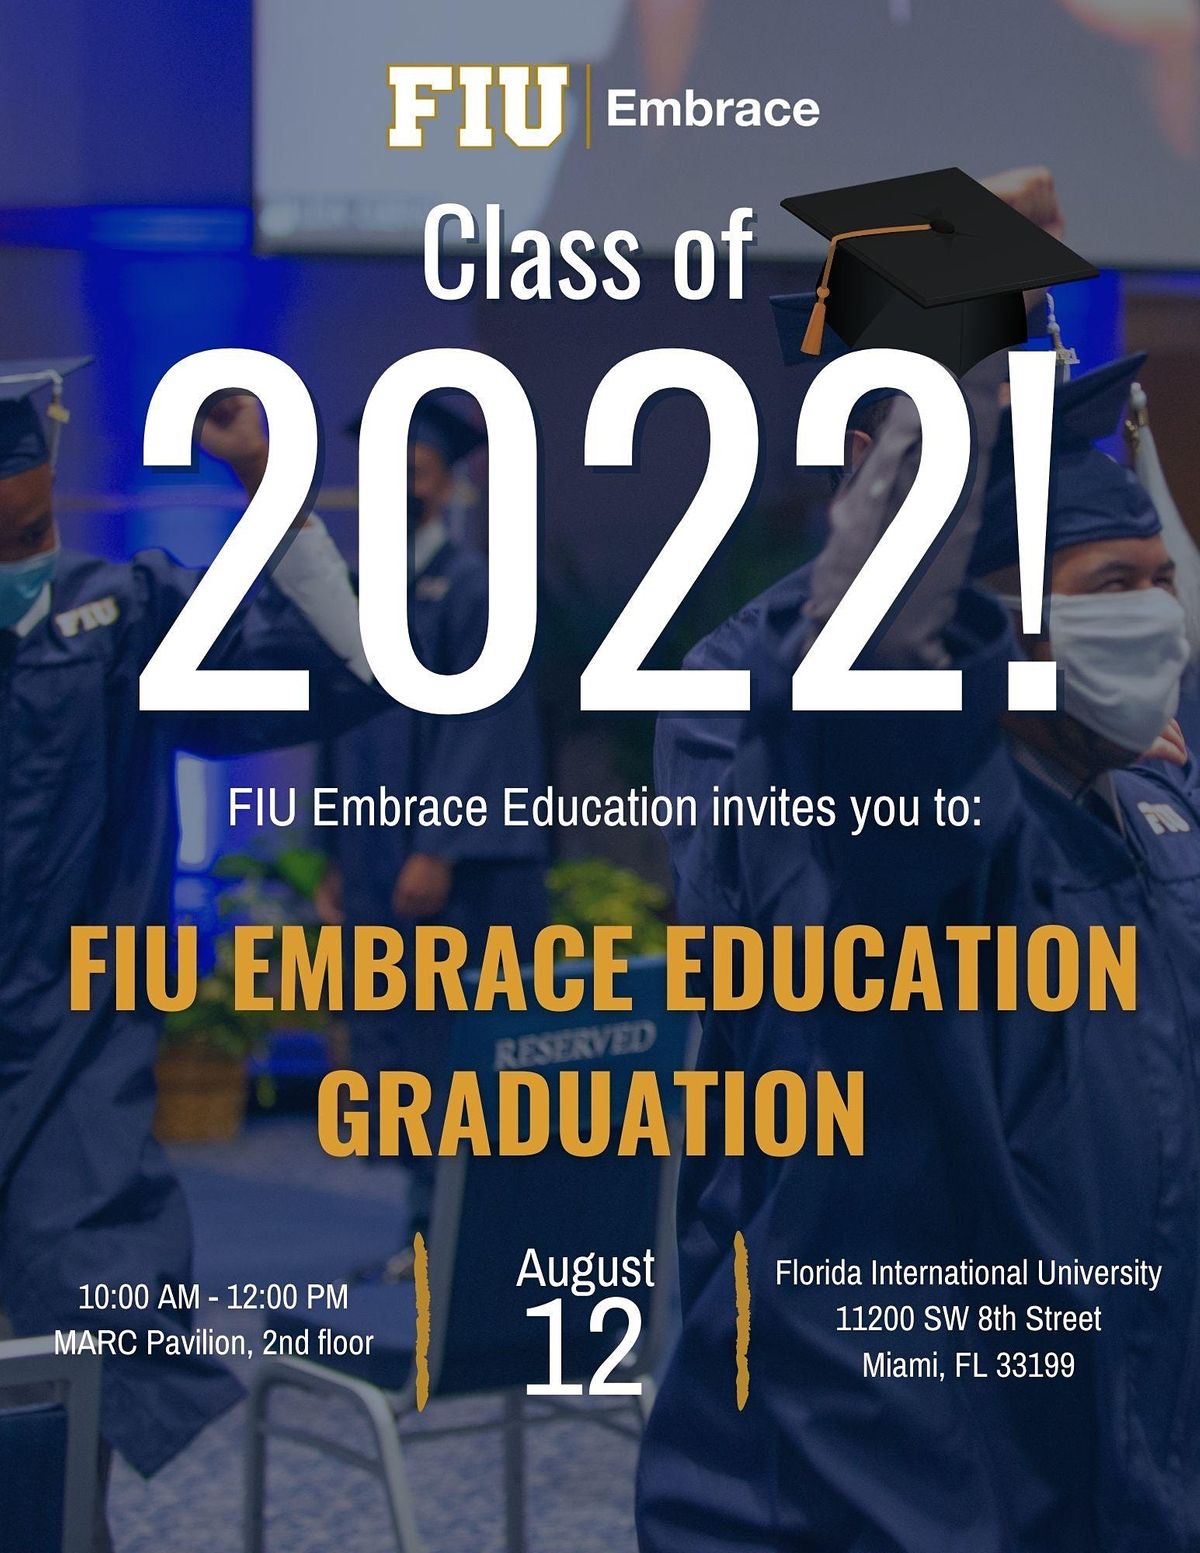 FIU Embrace Education 2022 Graduation Management and Advanced